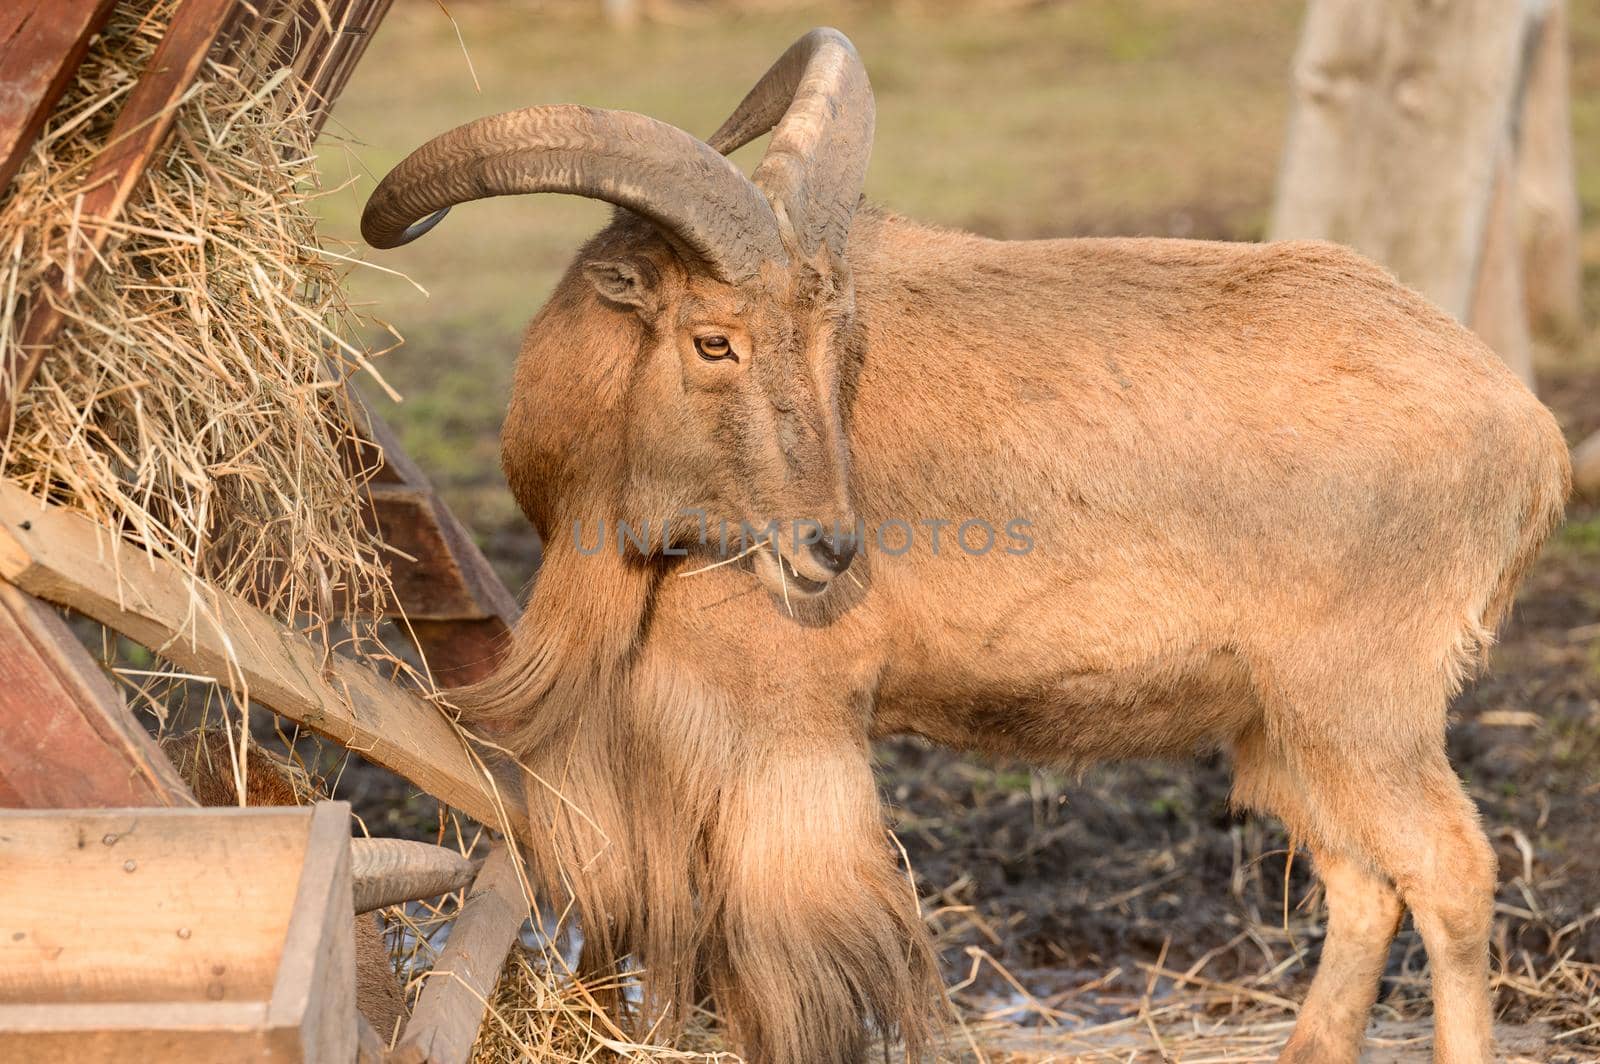 Maned ram eats hay, an animal in the zoo. by Niko_Cingaryuk